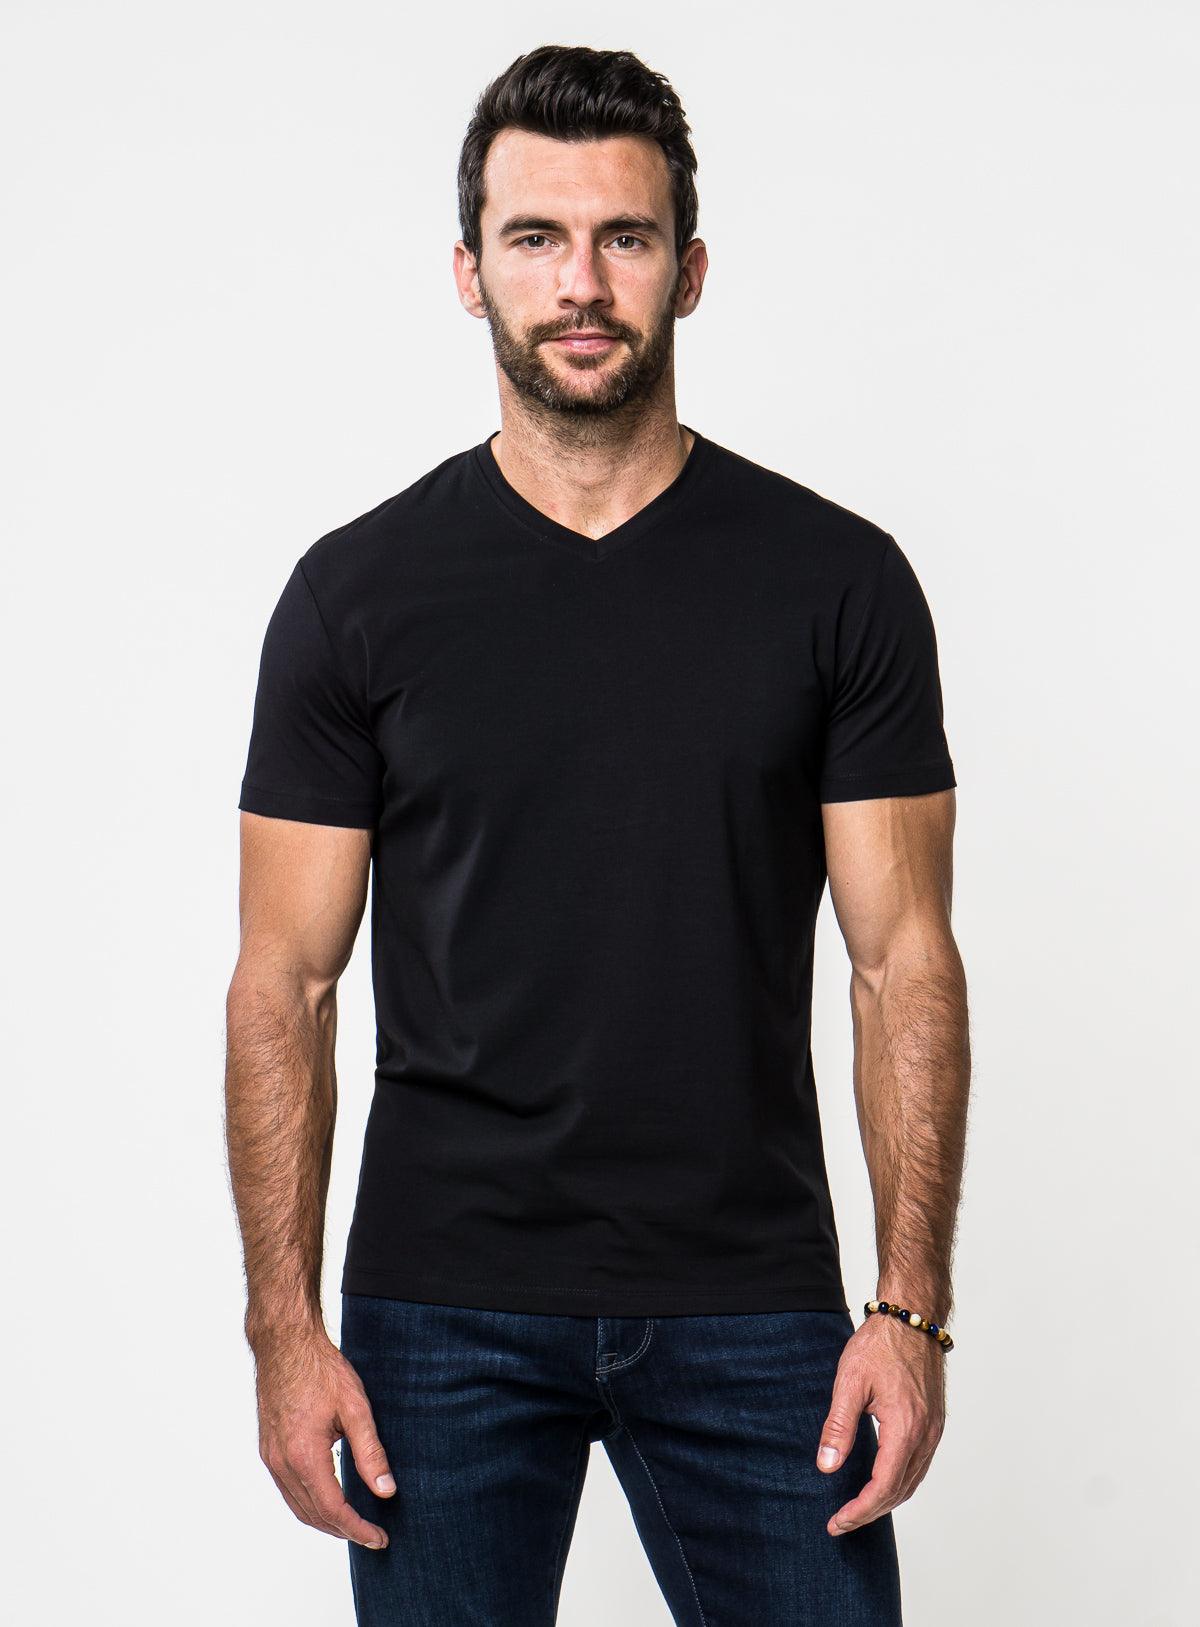 Men's T-Shirts, Black & Crew Neck T-Shirts